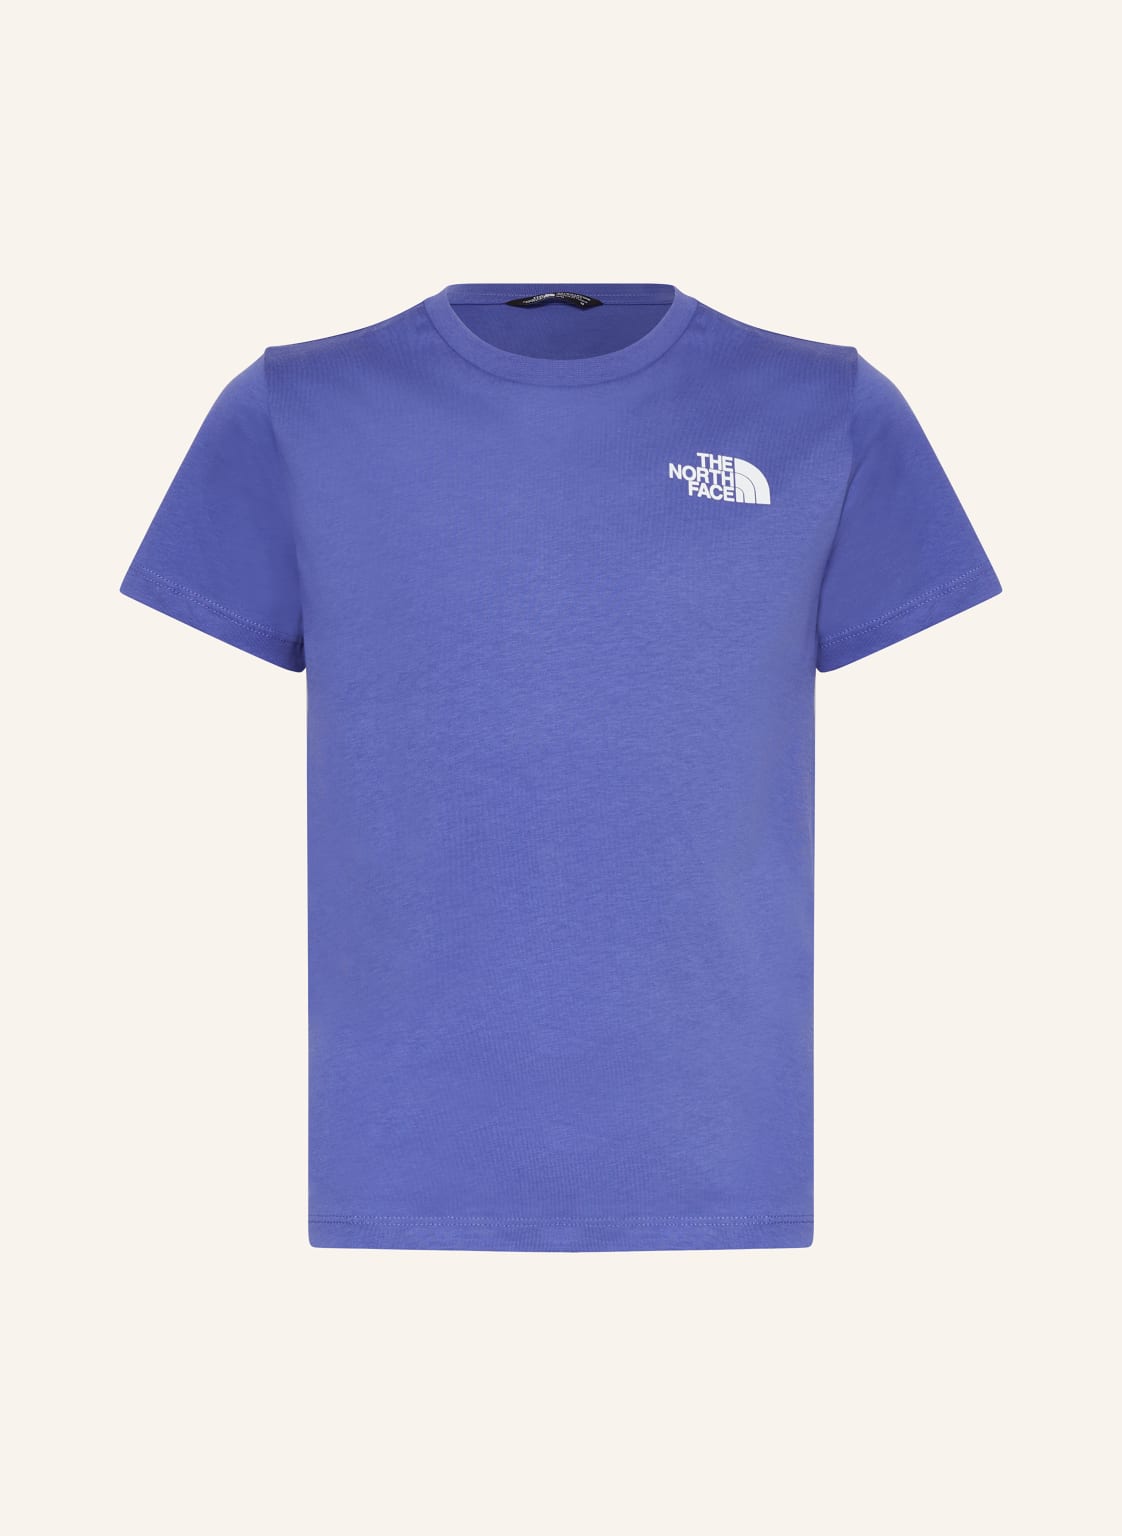 The North Face T-Shirt blau von The North Face